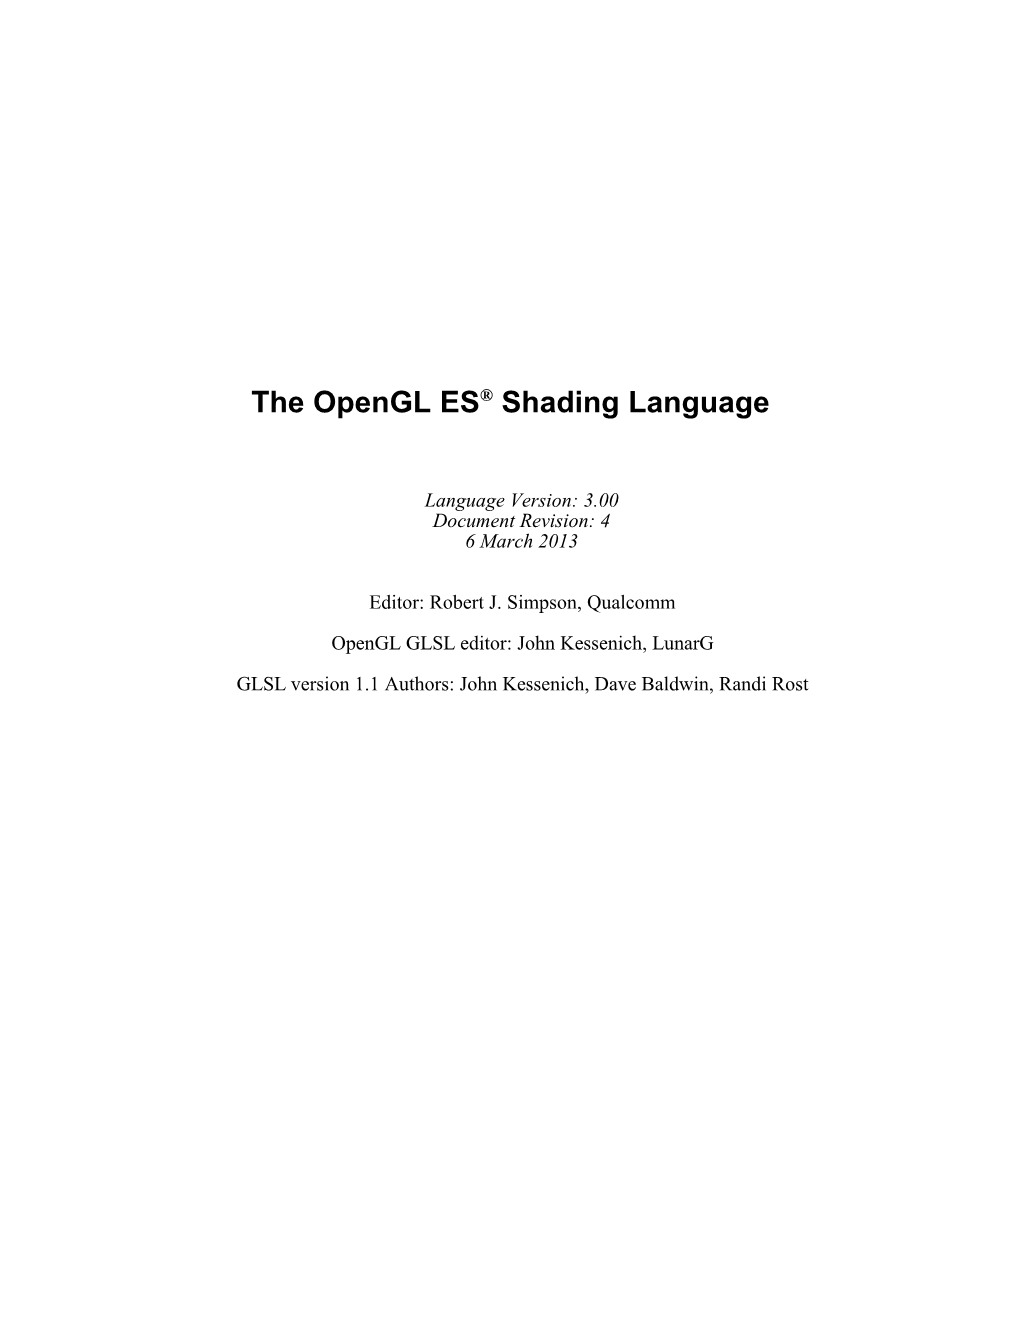 The Opengl ES Shading Language